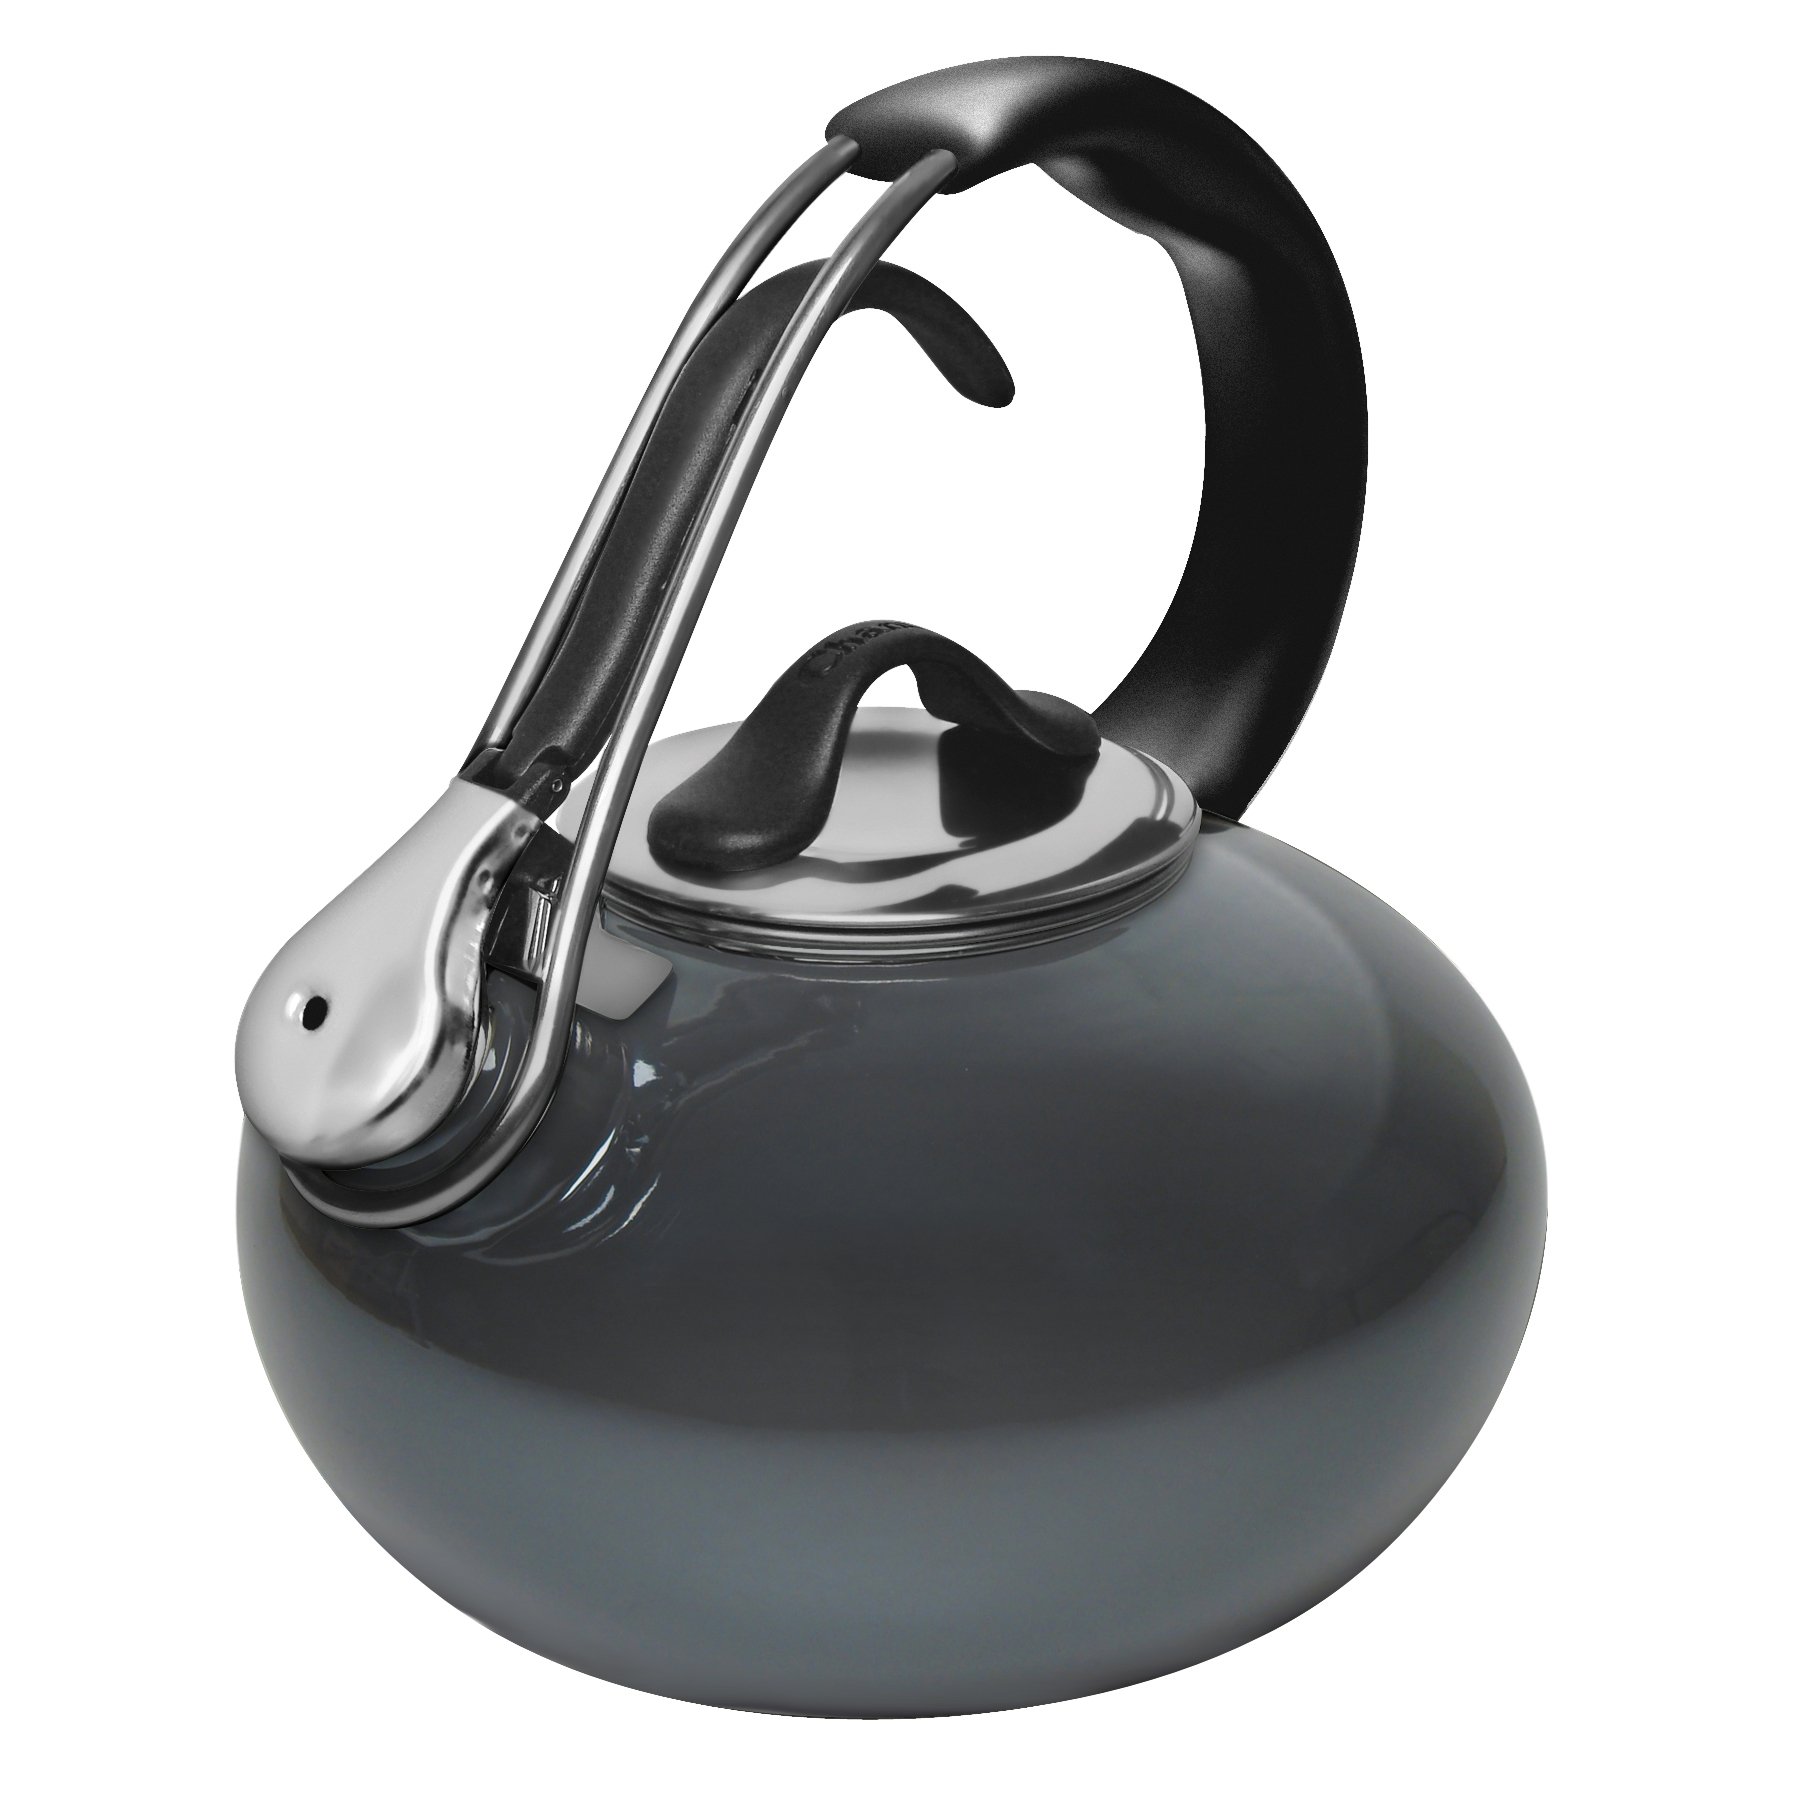 Chantal 37-LOOPME Classic Loop Tea kettle, 1.8 qt Capacity, Ergonomic Handle, Carbon Steel, Enamel, Onyx - 1